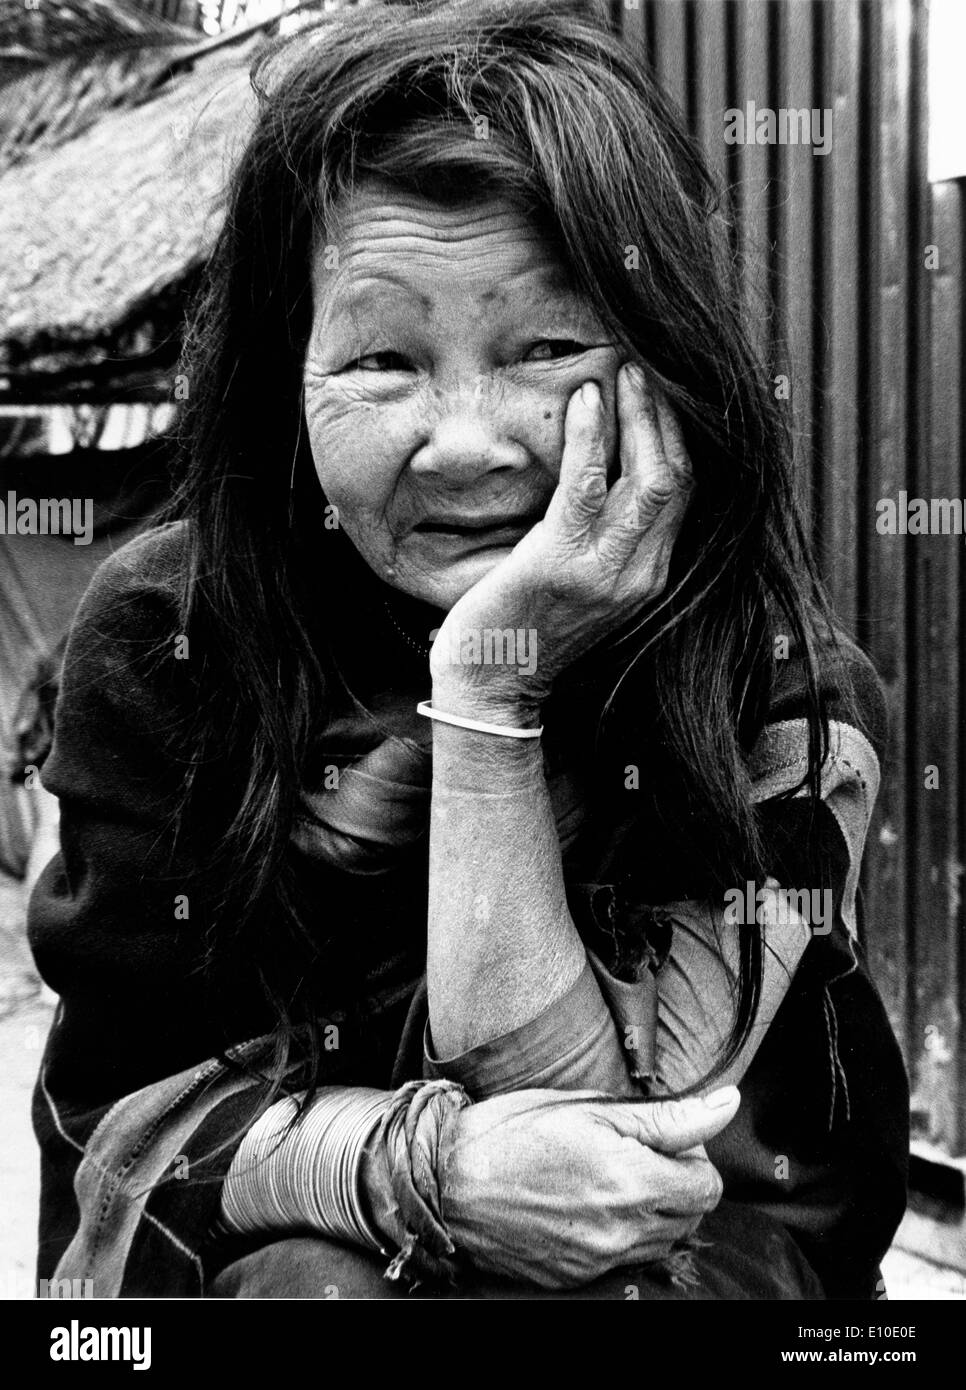 Vietnamese woman on the streets Stock Photo